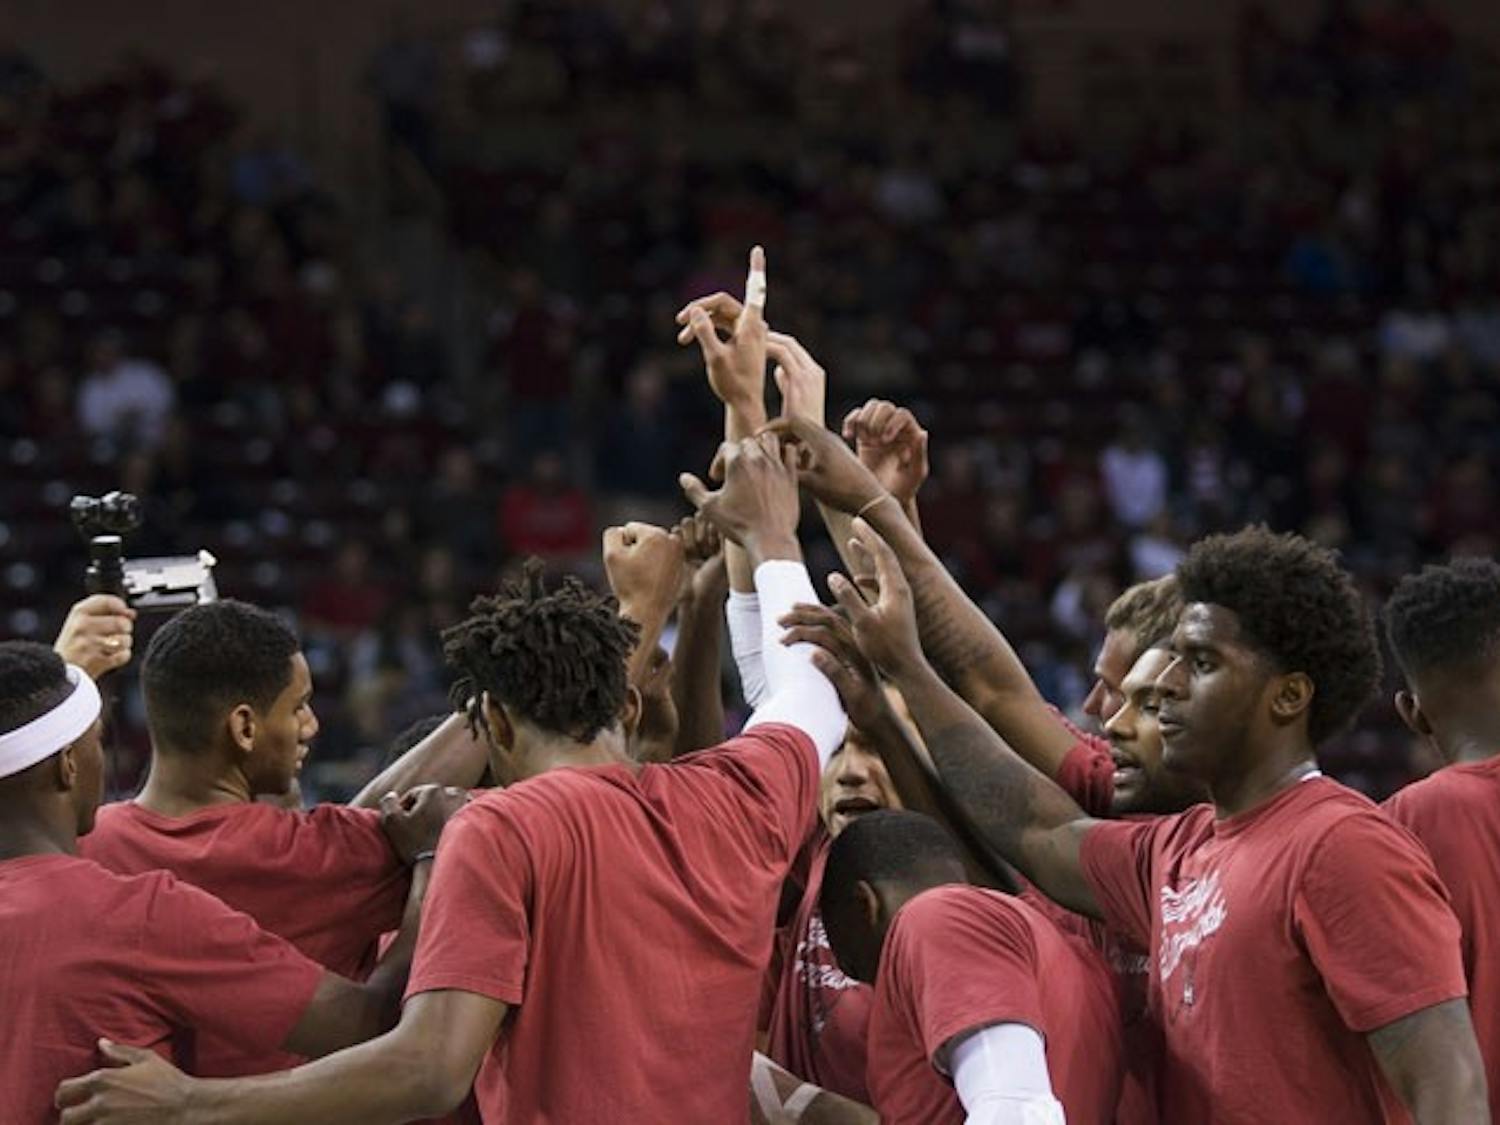 Men's basketball remains on top, beating University of Alabama 78-64